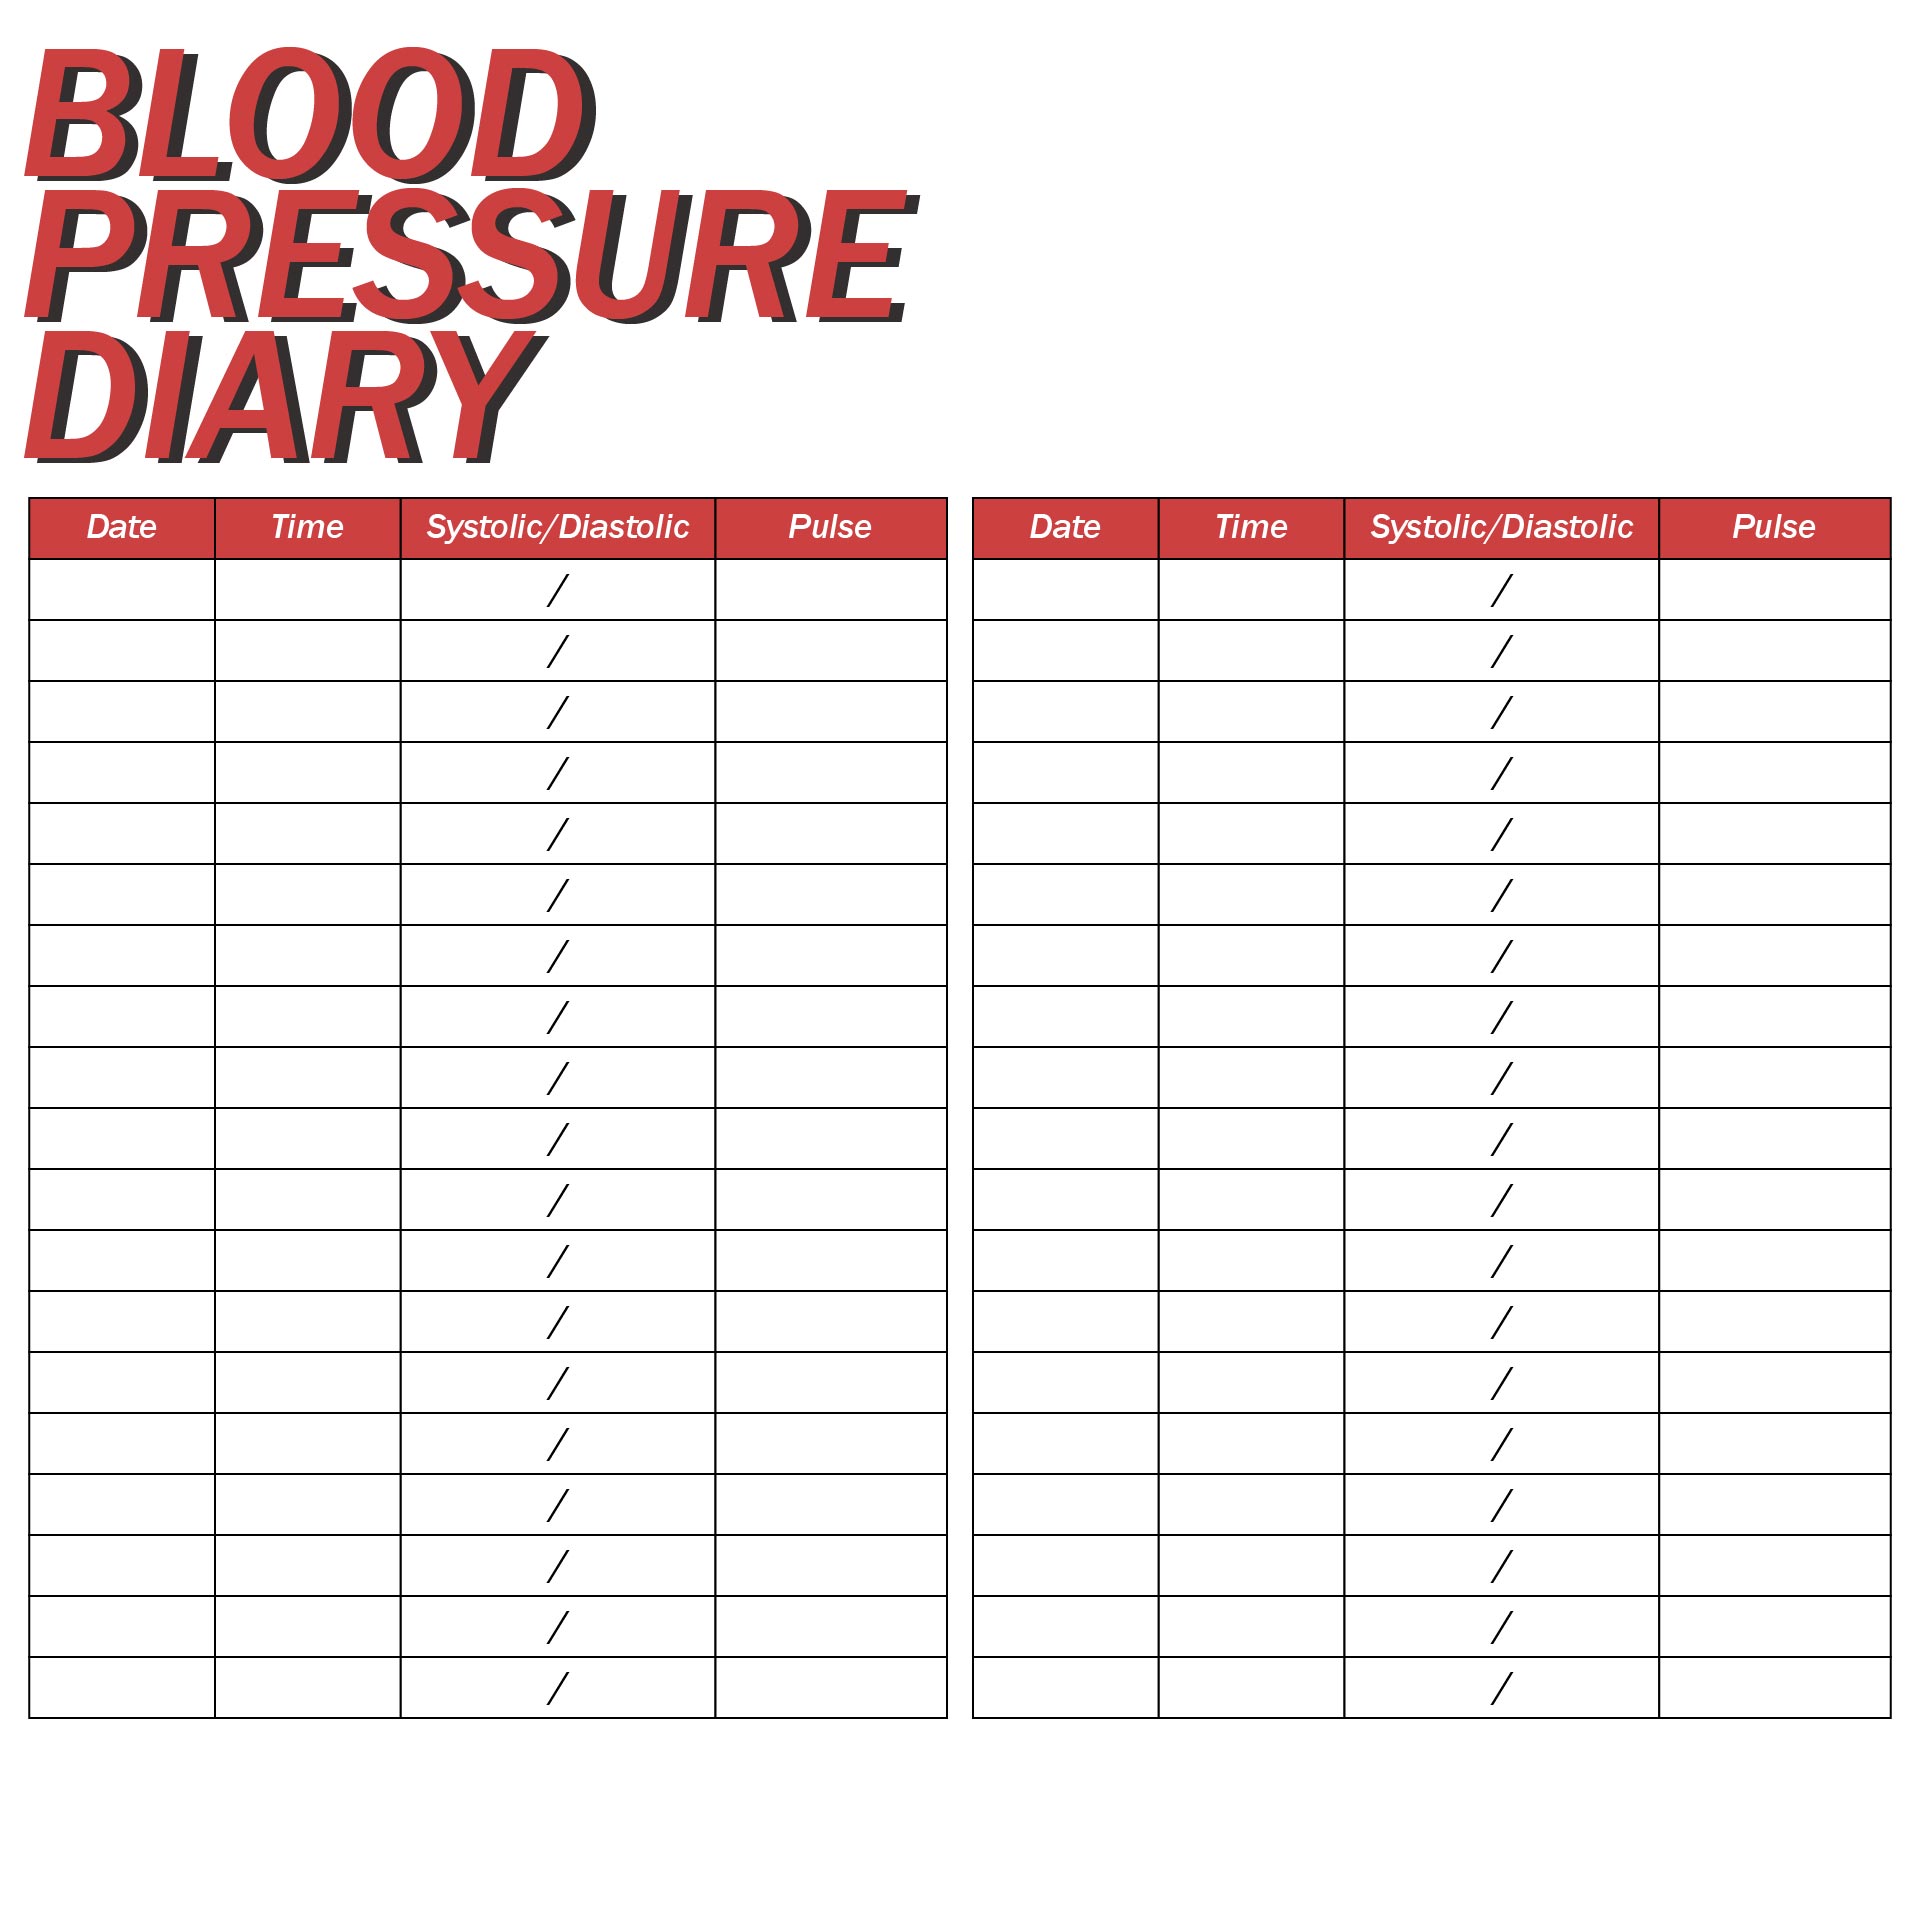 Blood Pressure Chart Printable Free